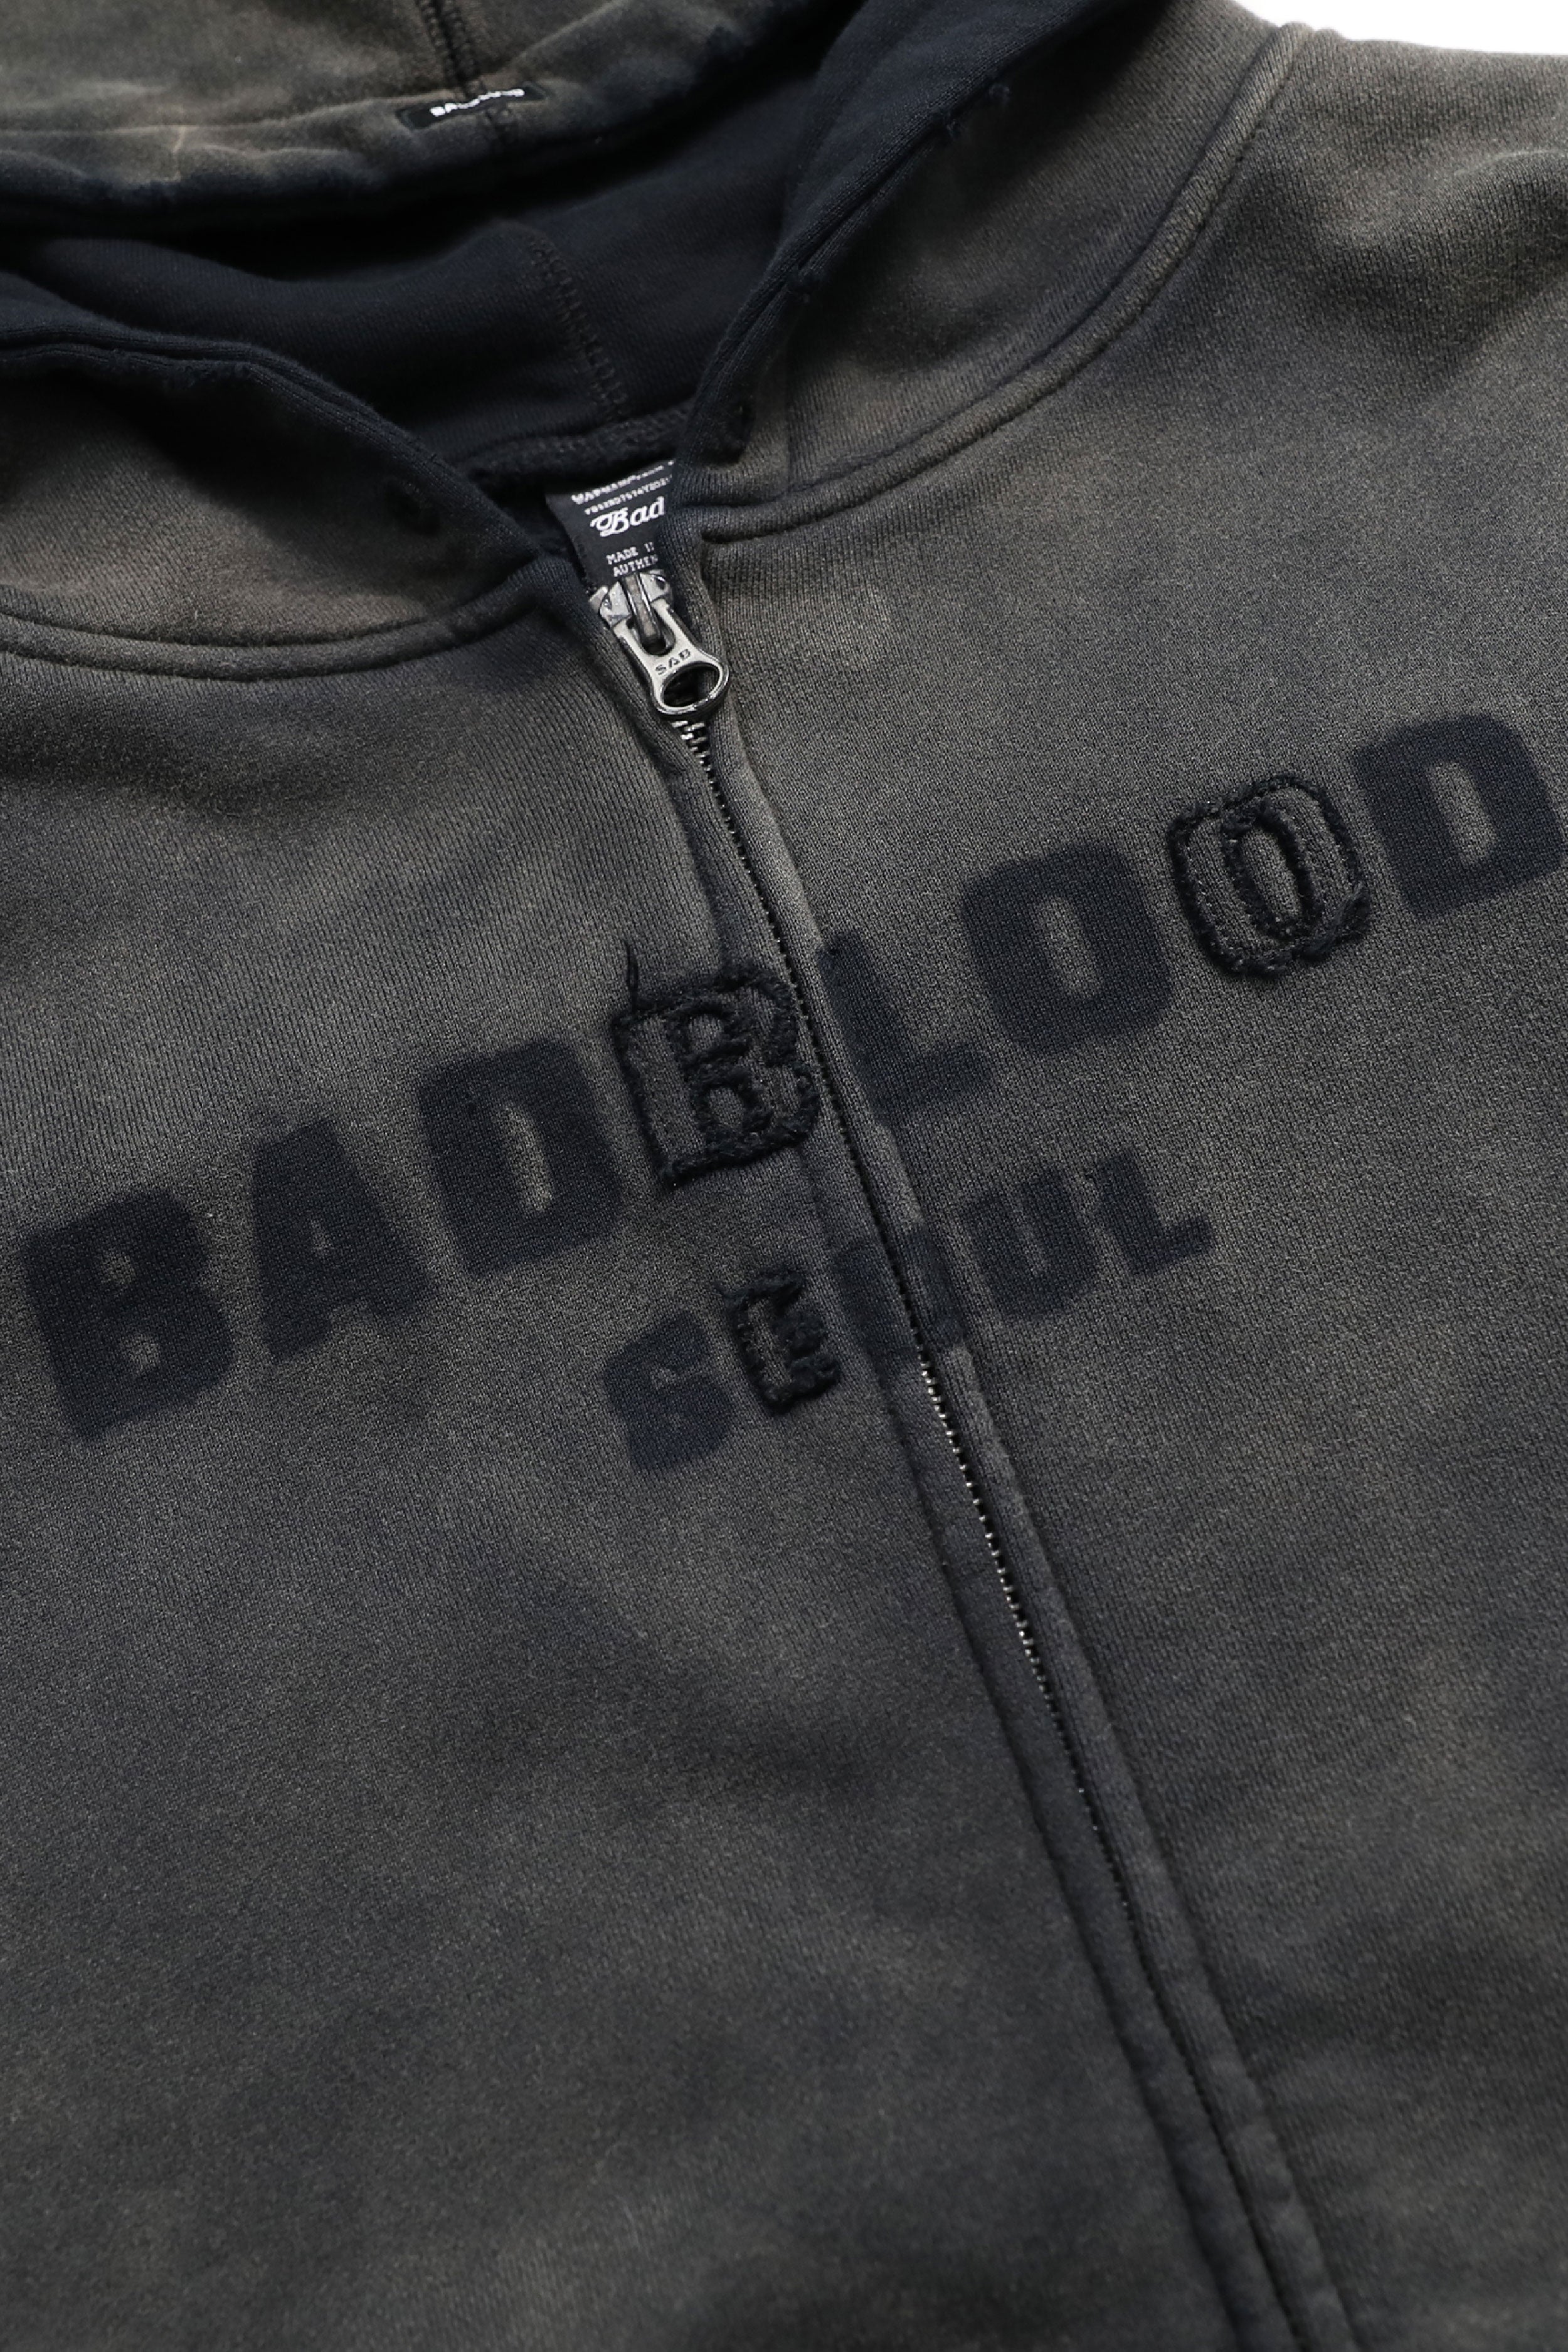 Badblood Sun Faded Hood Zip-up Large Fit Black